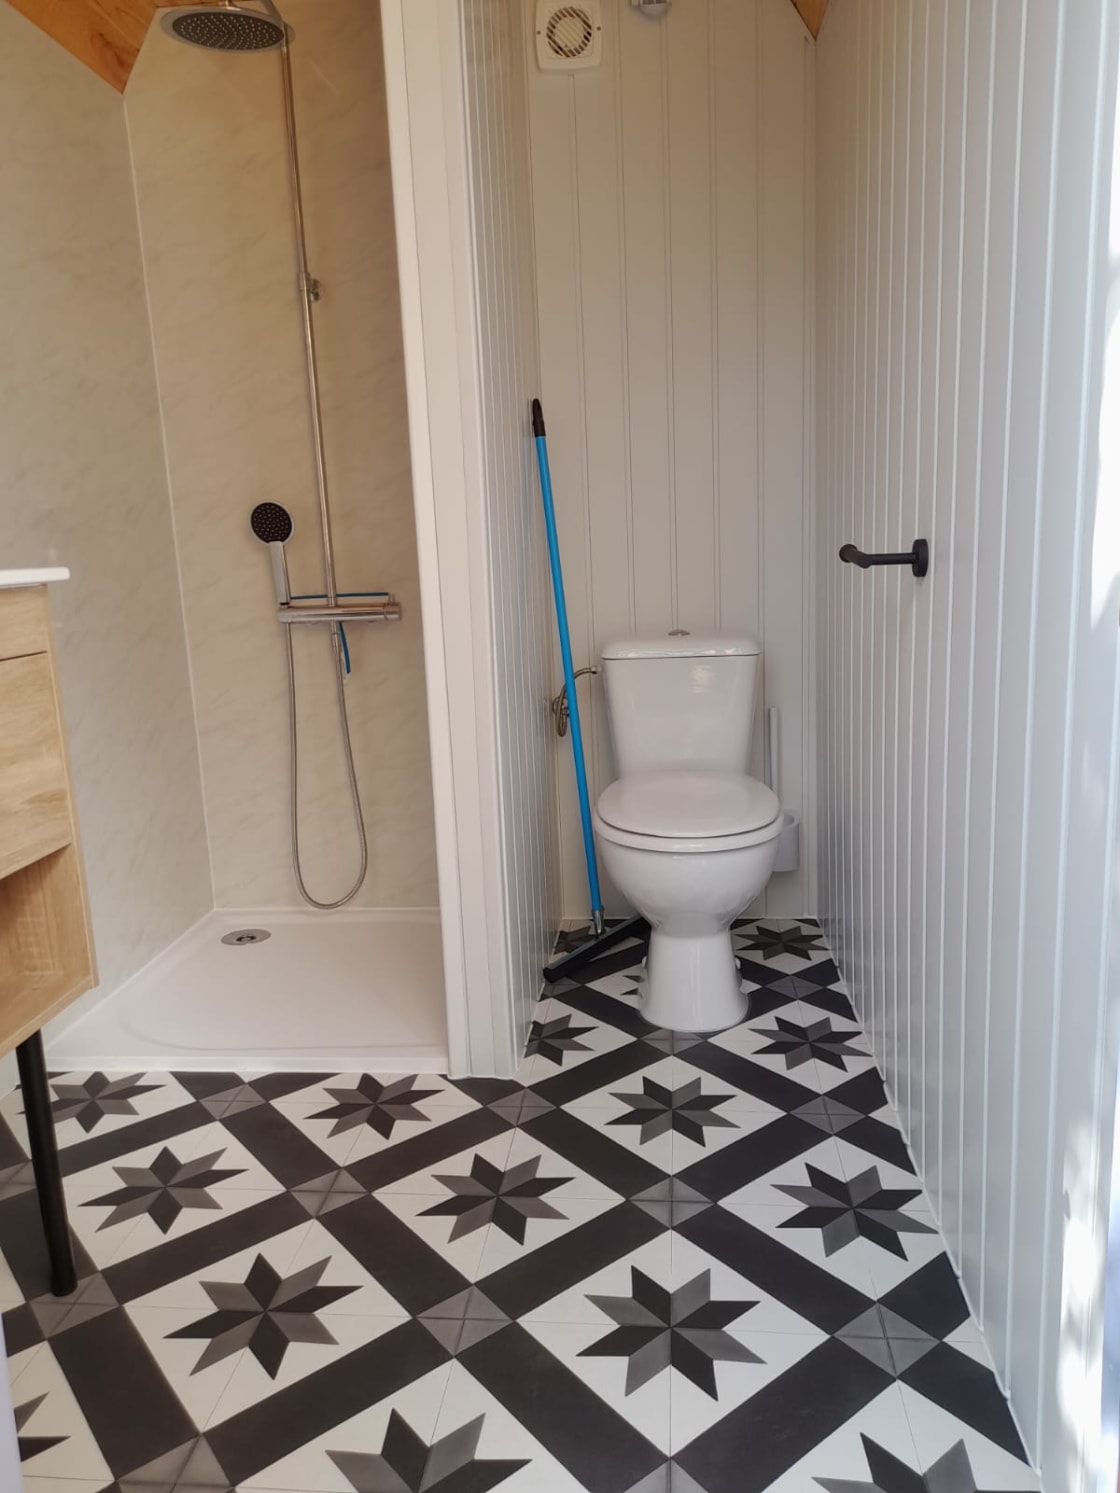 Interior of horsebox bathroom, shower, flushing toilet and sink